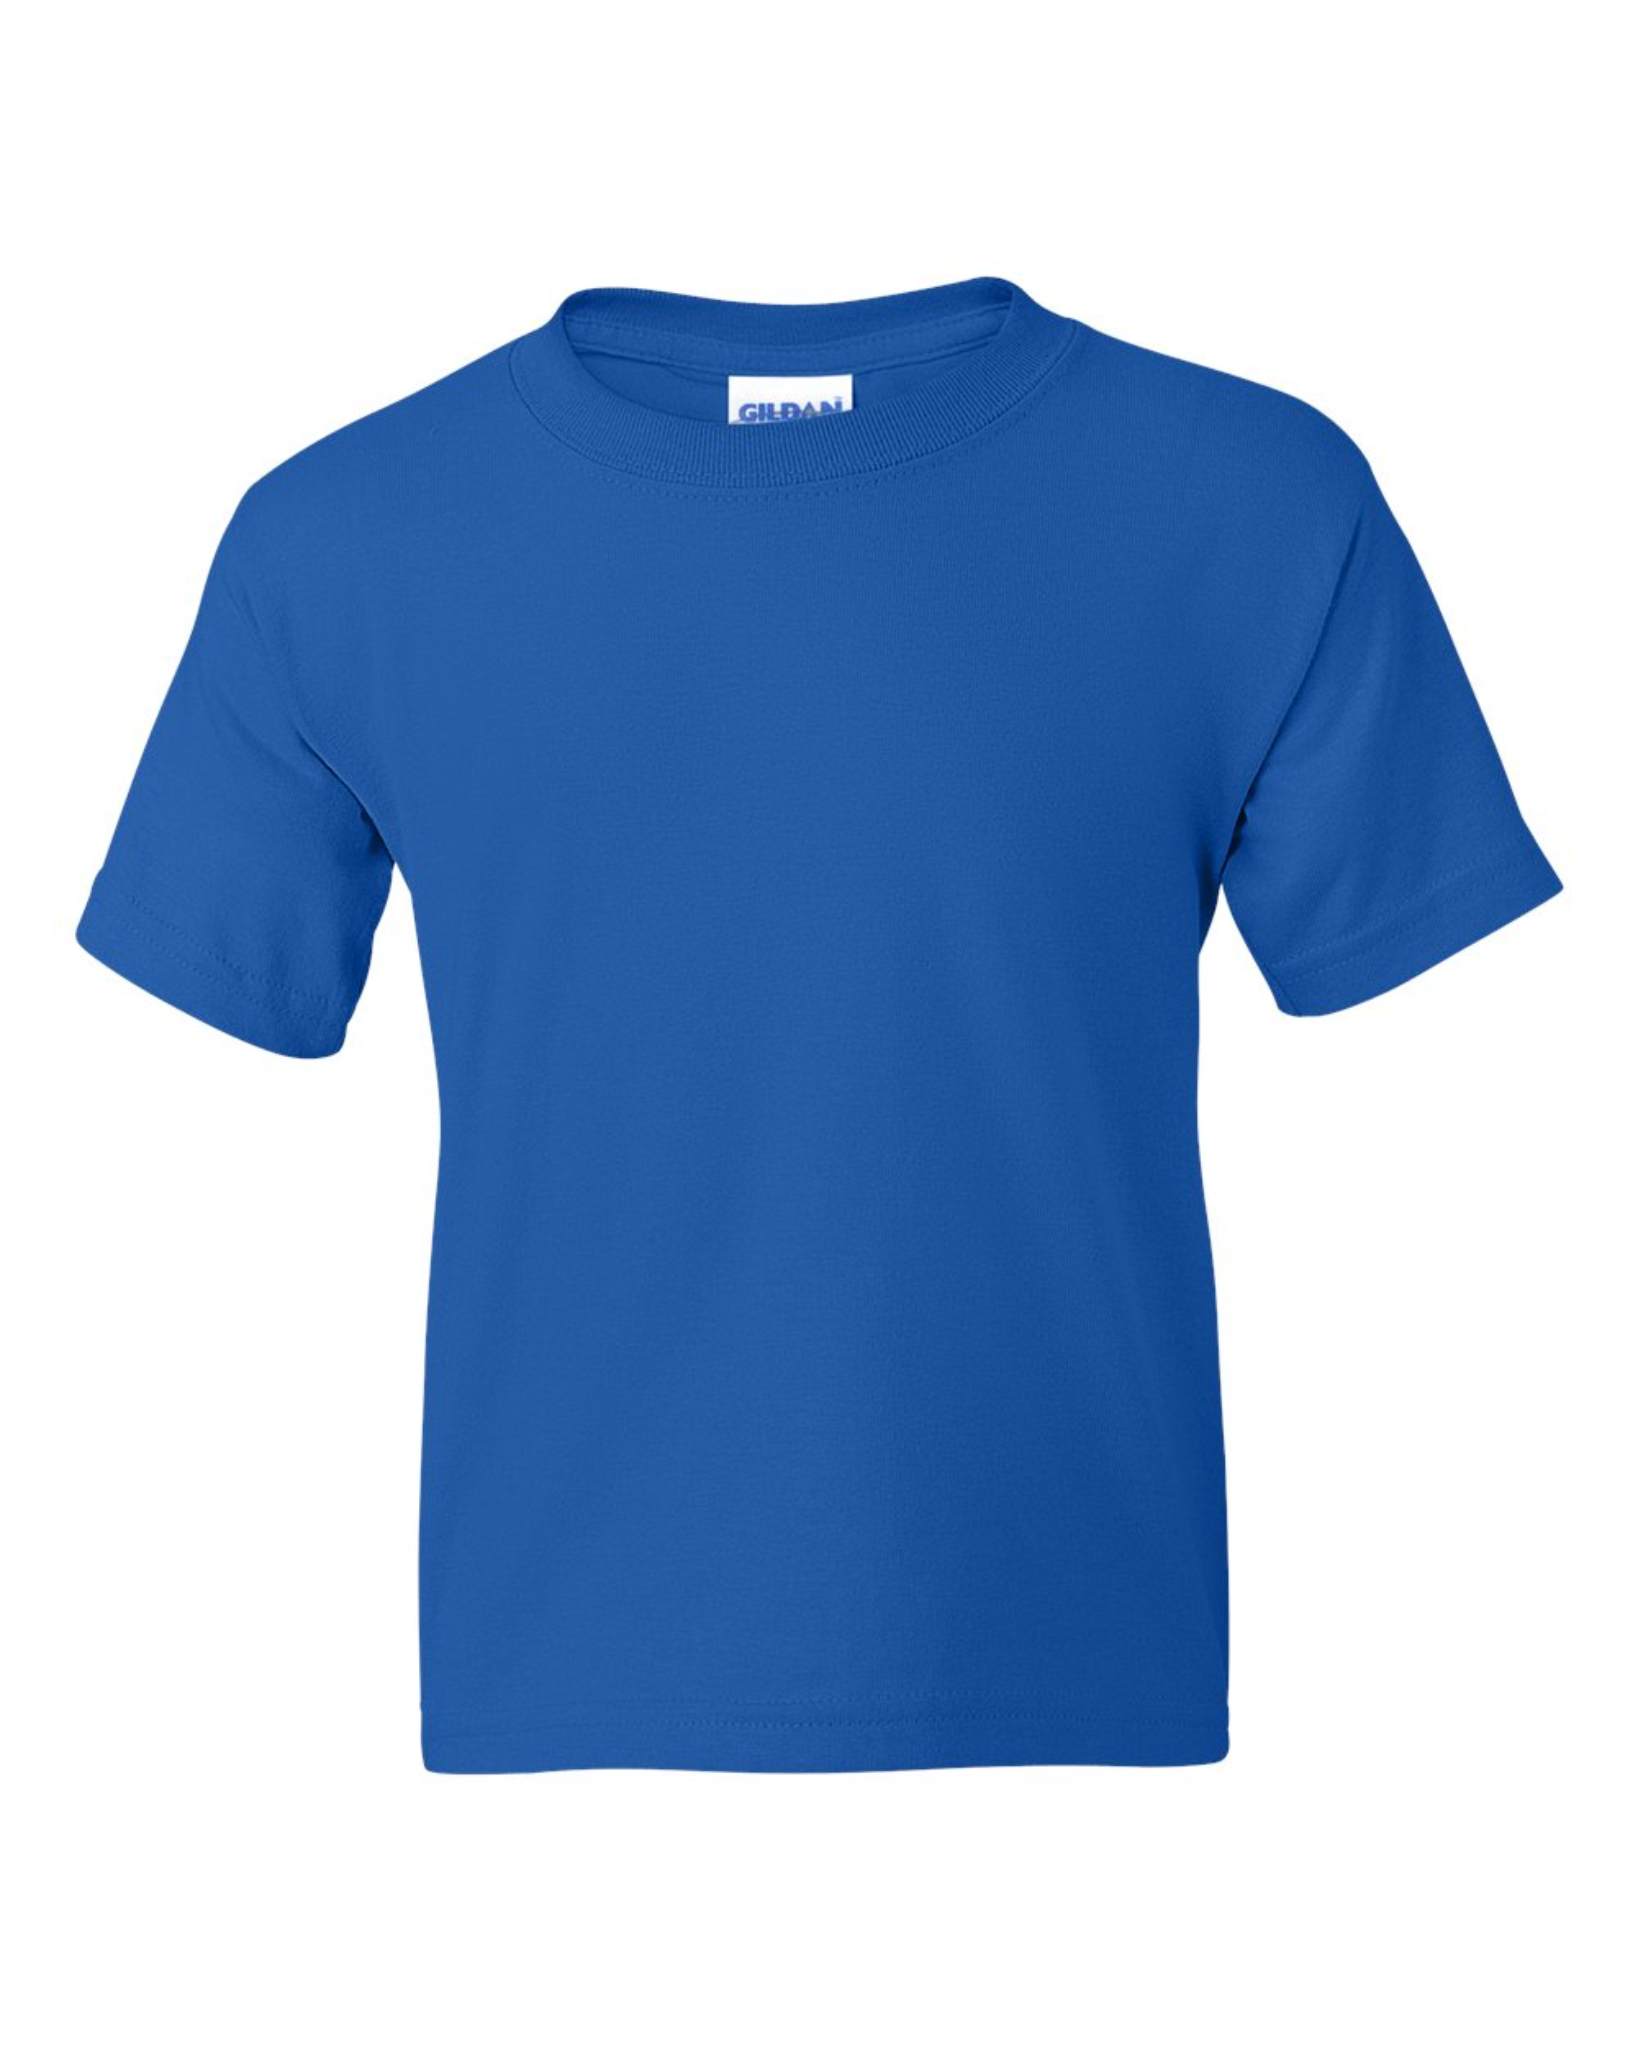 Youth T-Shirt - Cotton/Polyester - Gildan 8000B